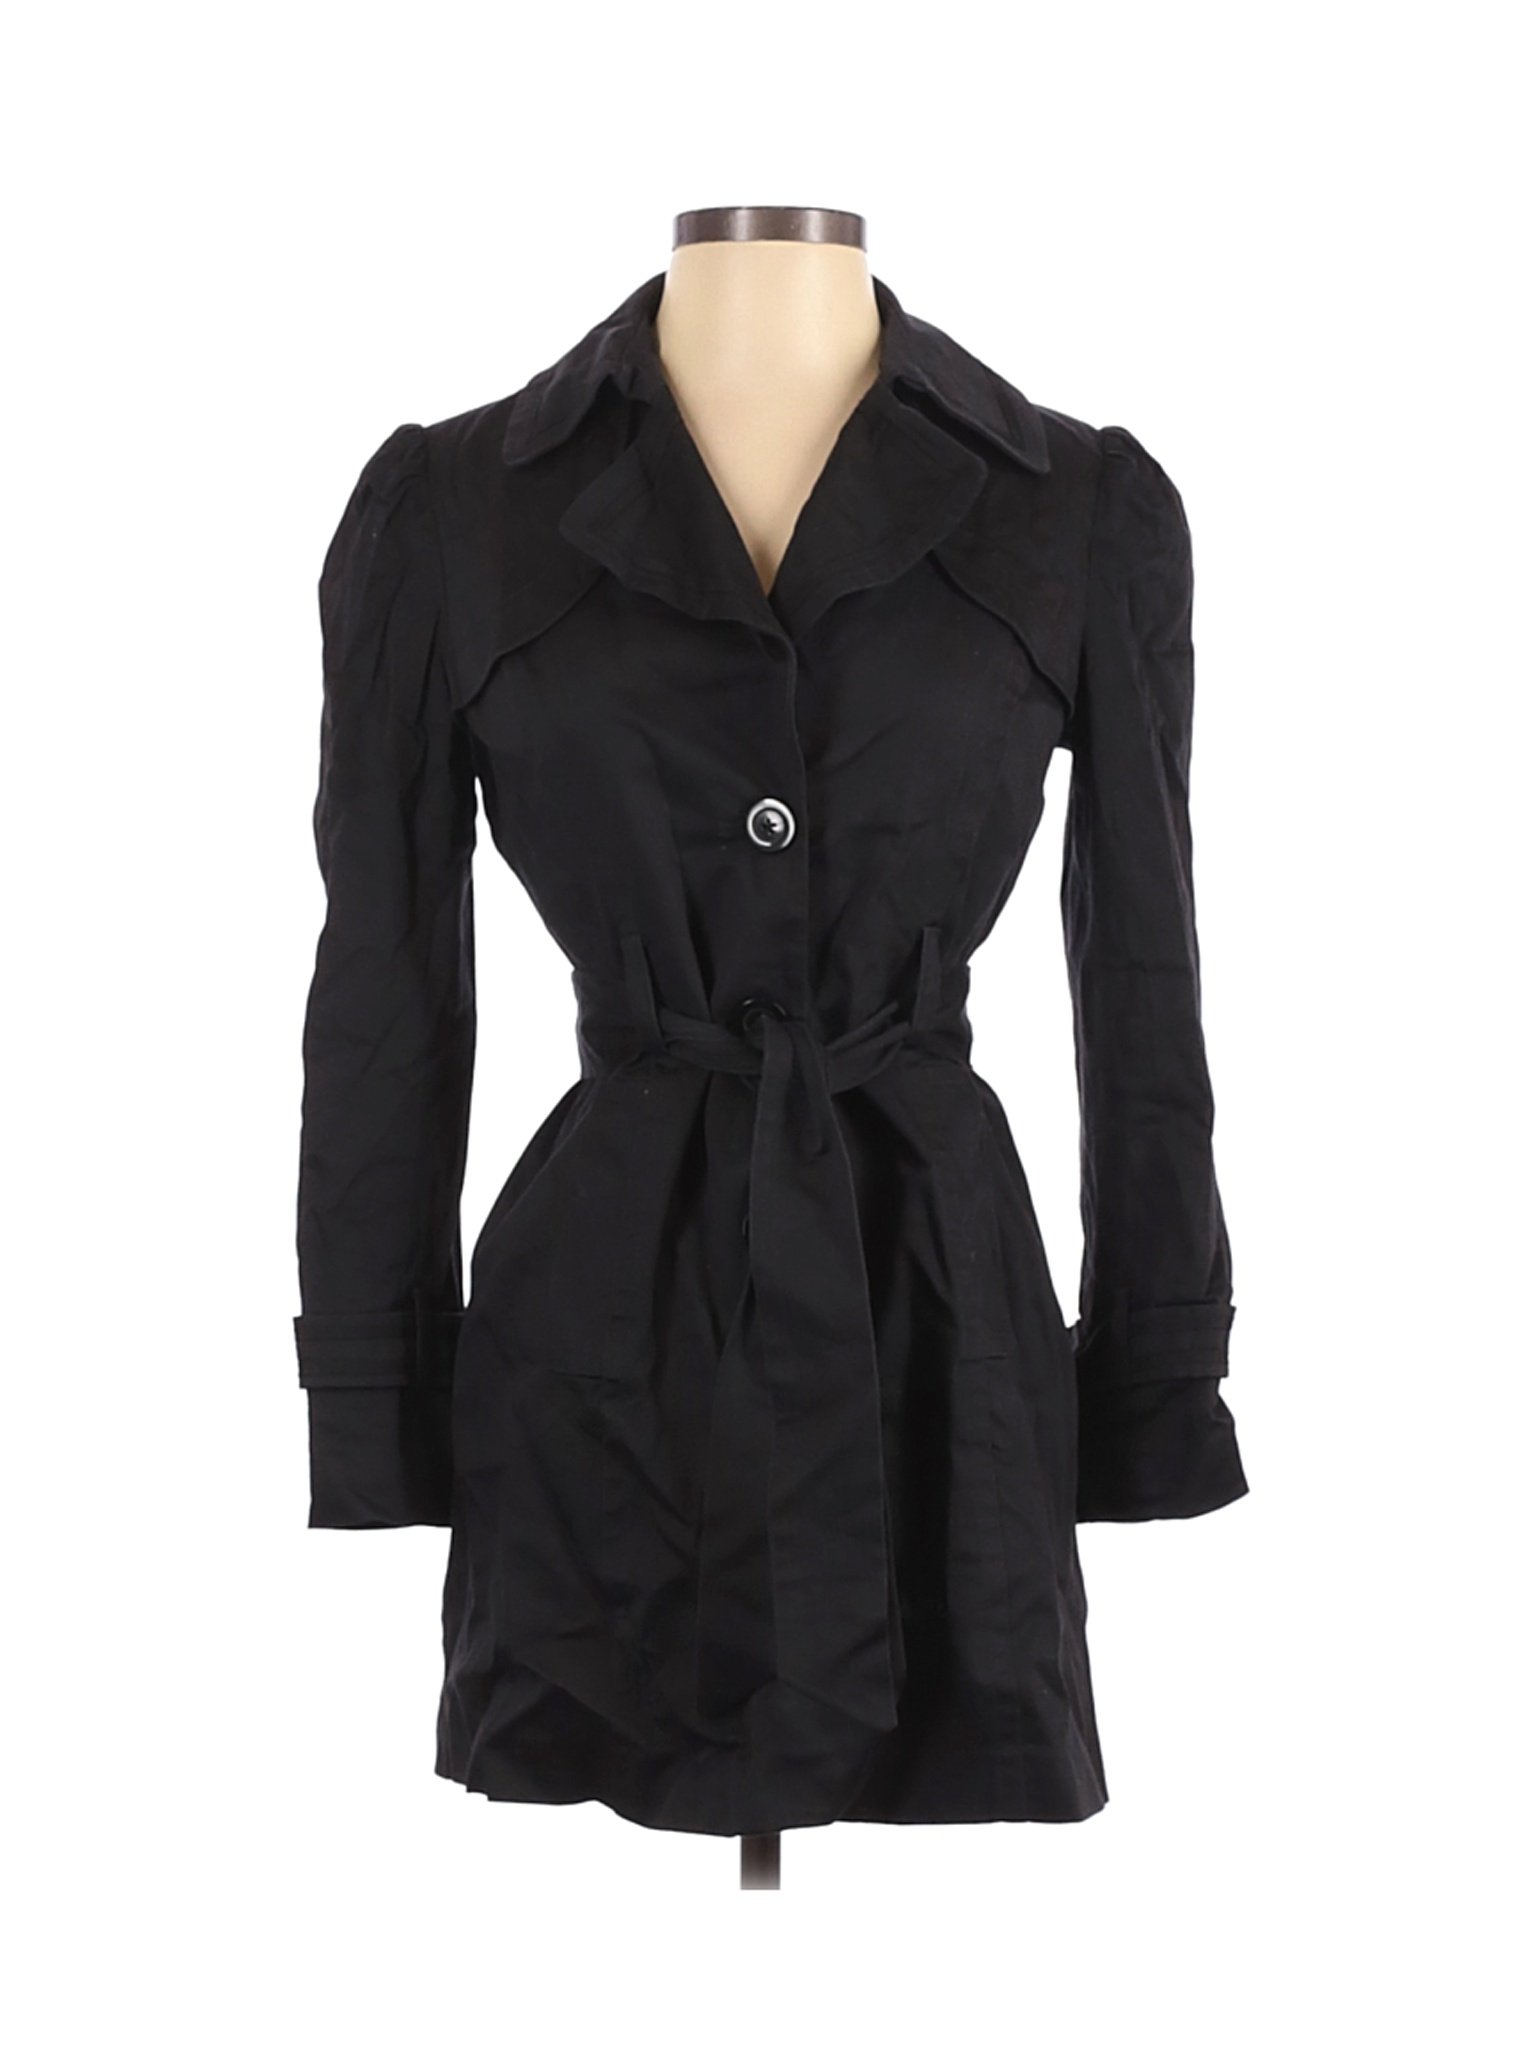 White House Black Market Women Black Coat XS | eBay